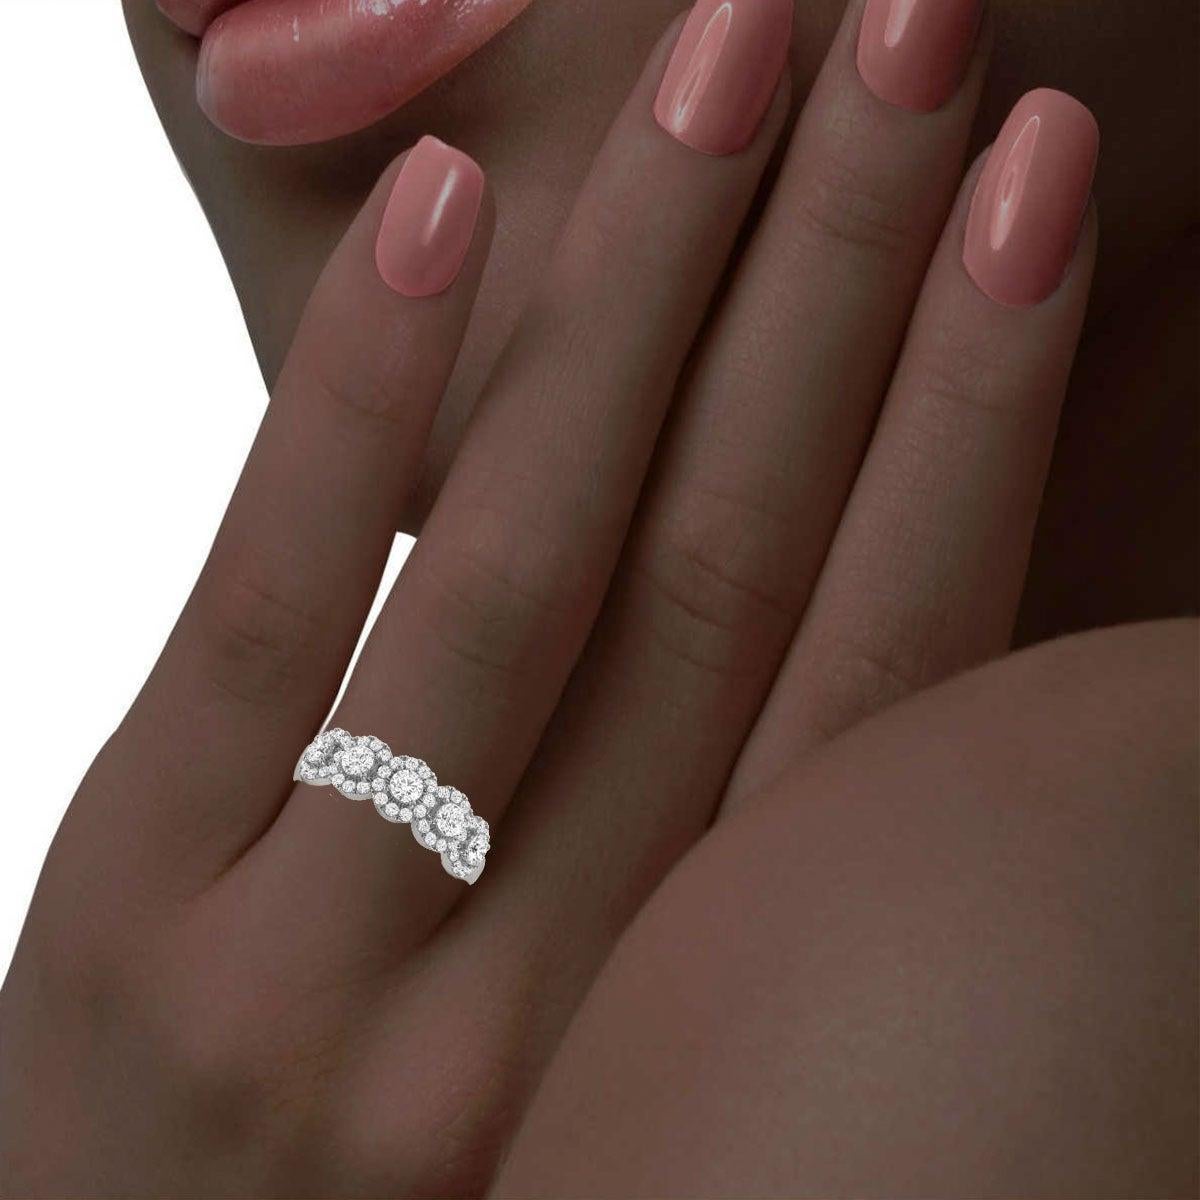 For Sale:  14k White Gold Petite Jenna Halo Diamond Ring '1/2 Ct. tw' 4